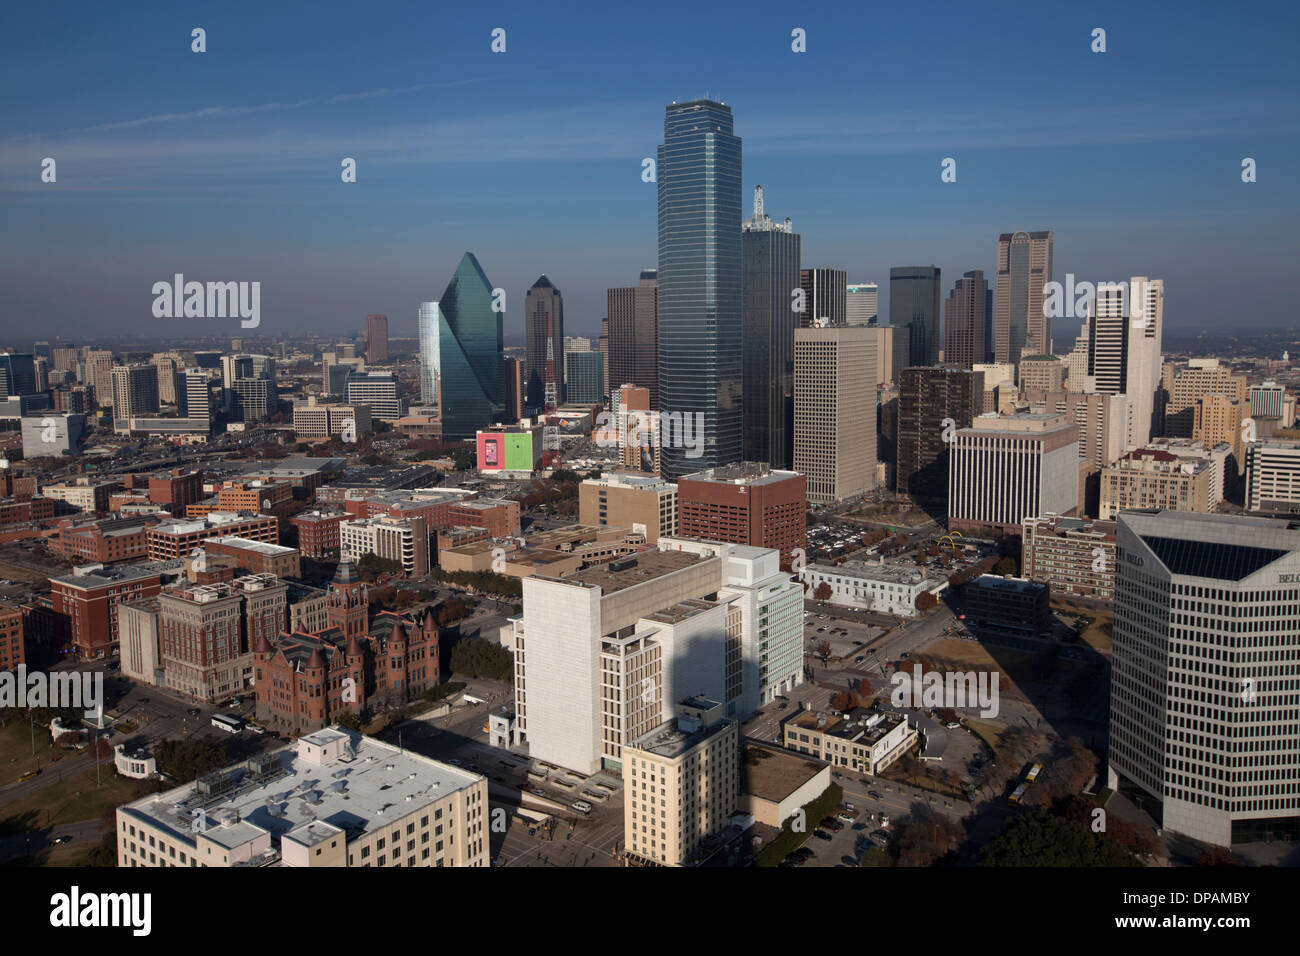 Dallas downtown, Texas, United States, December 12, 2013. Stock Photo